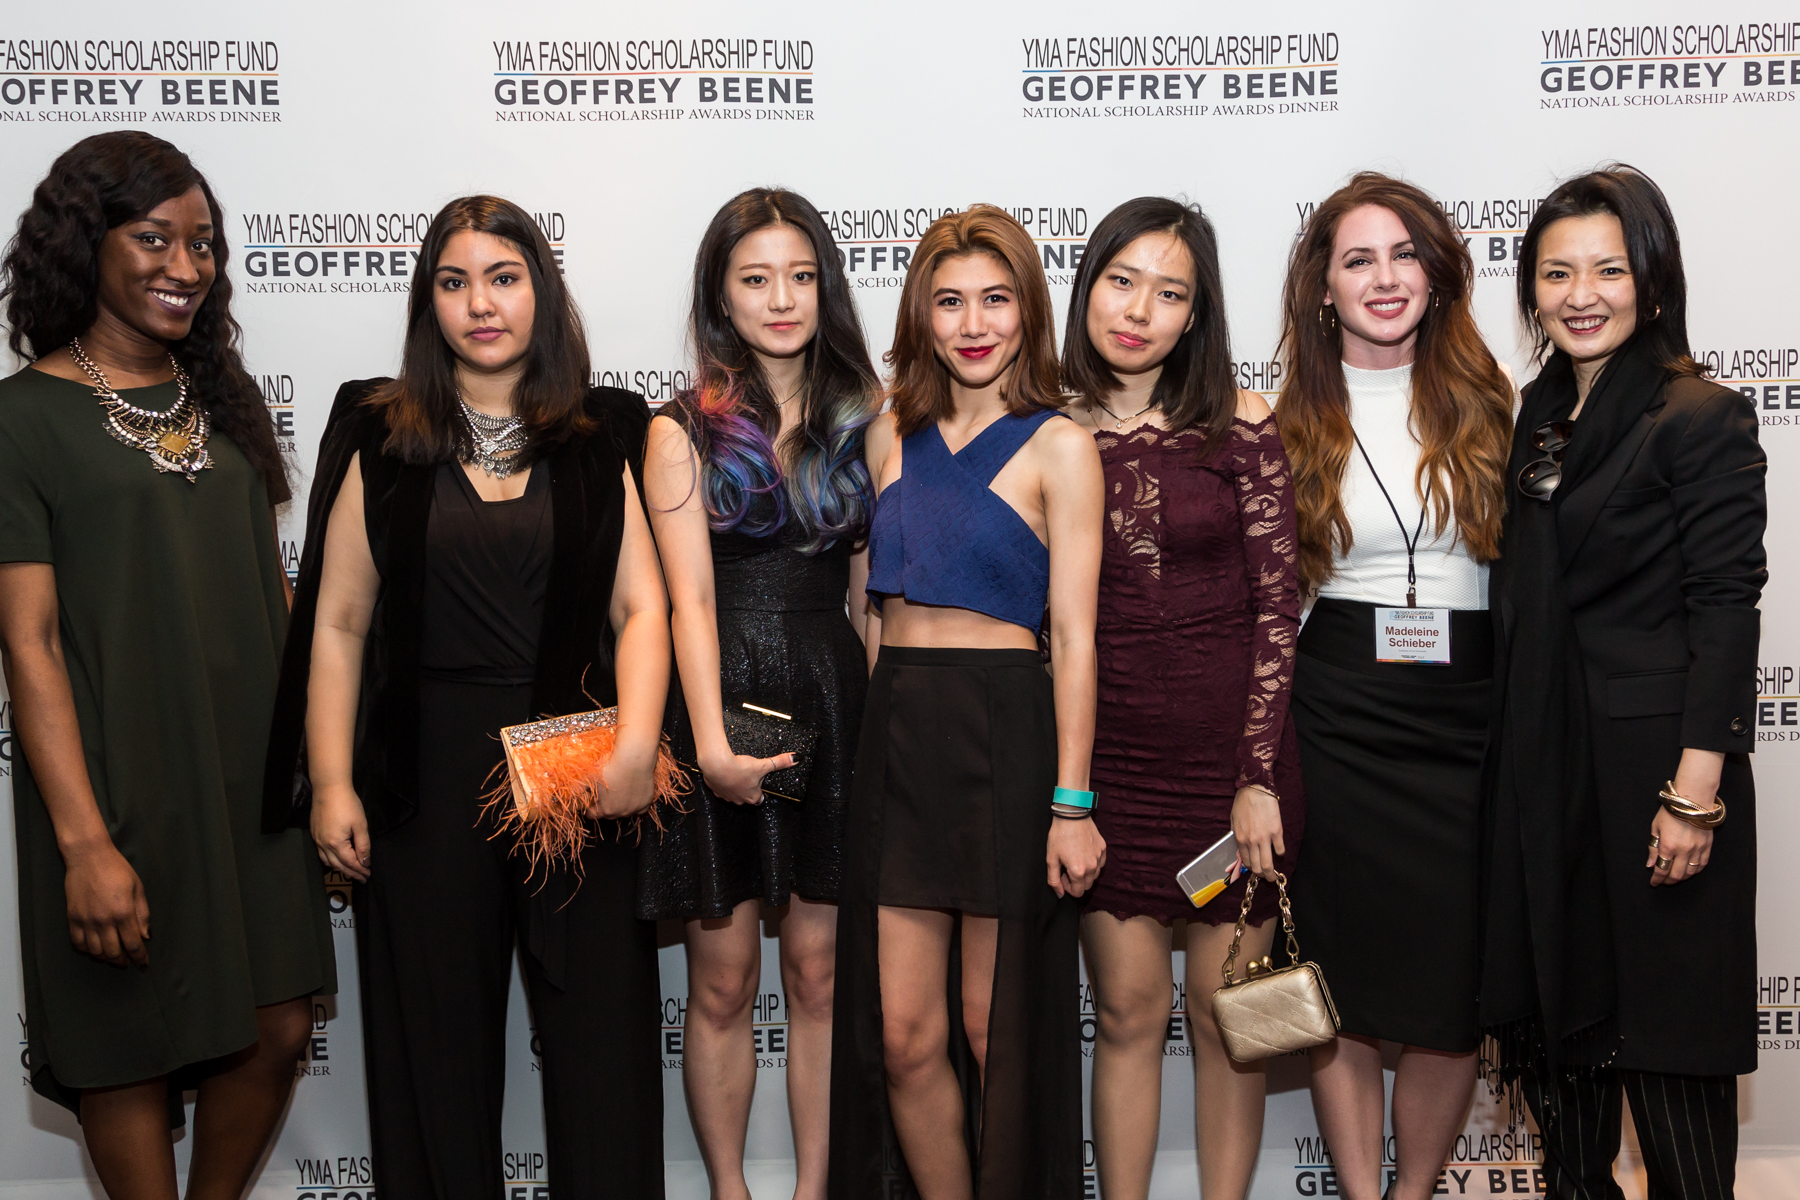 From the left: Kathleen O’Heron, Nathifa Deandrade, Madeline Schieber, Yuna Choi, Busara Boussard, Jisoo Hong.